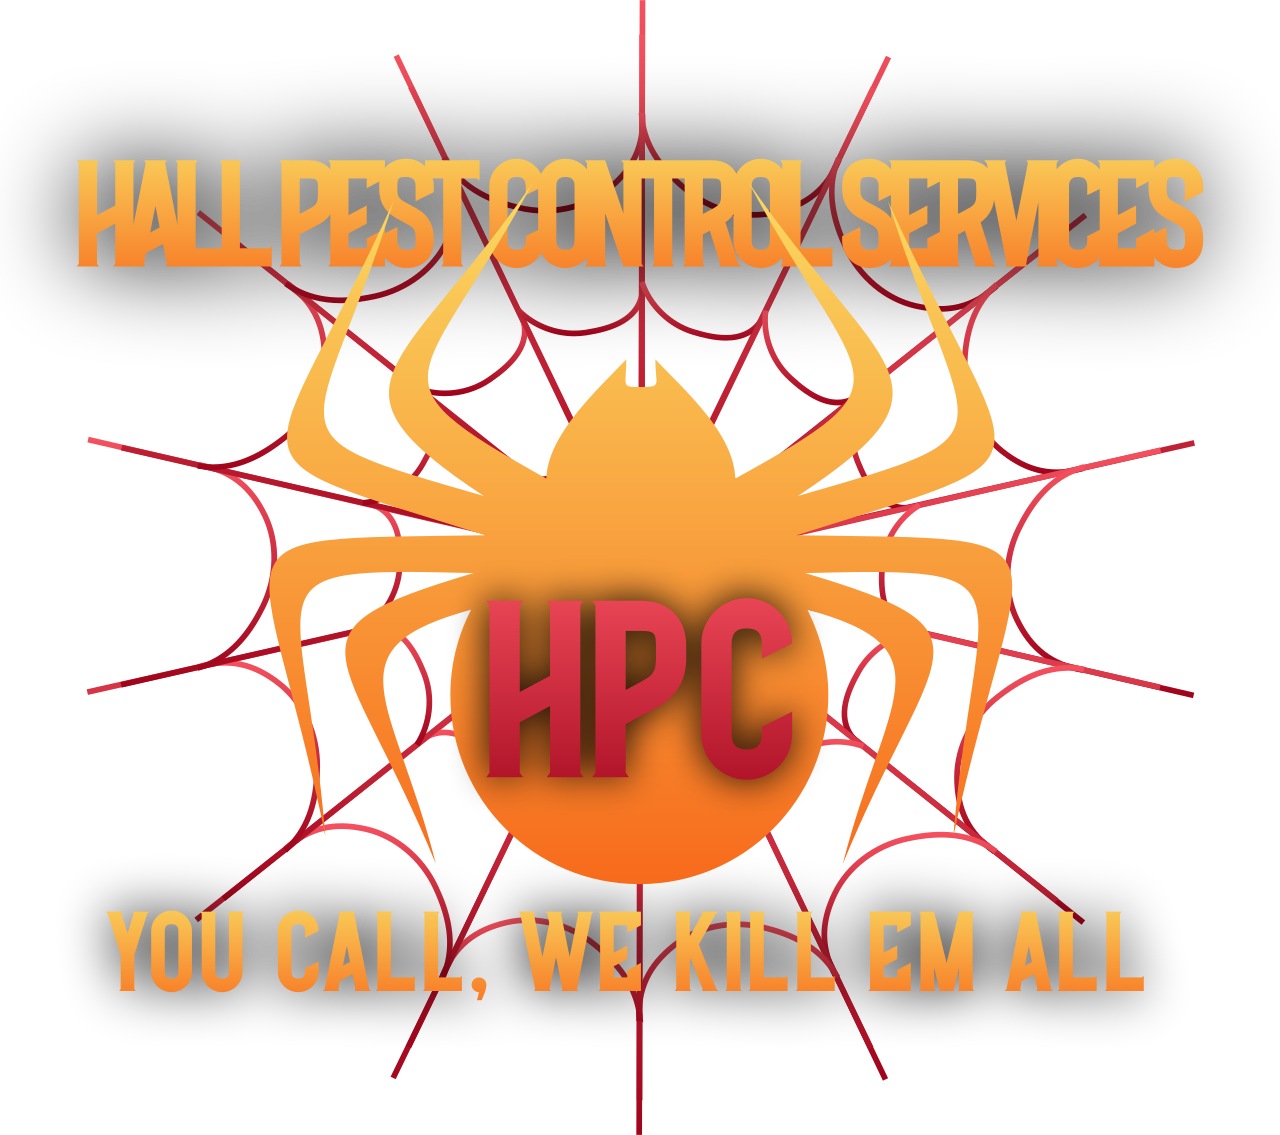 Hall Pest Control Services's logo